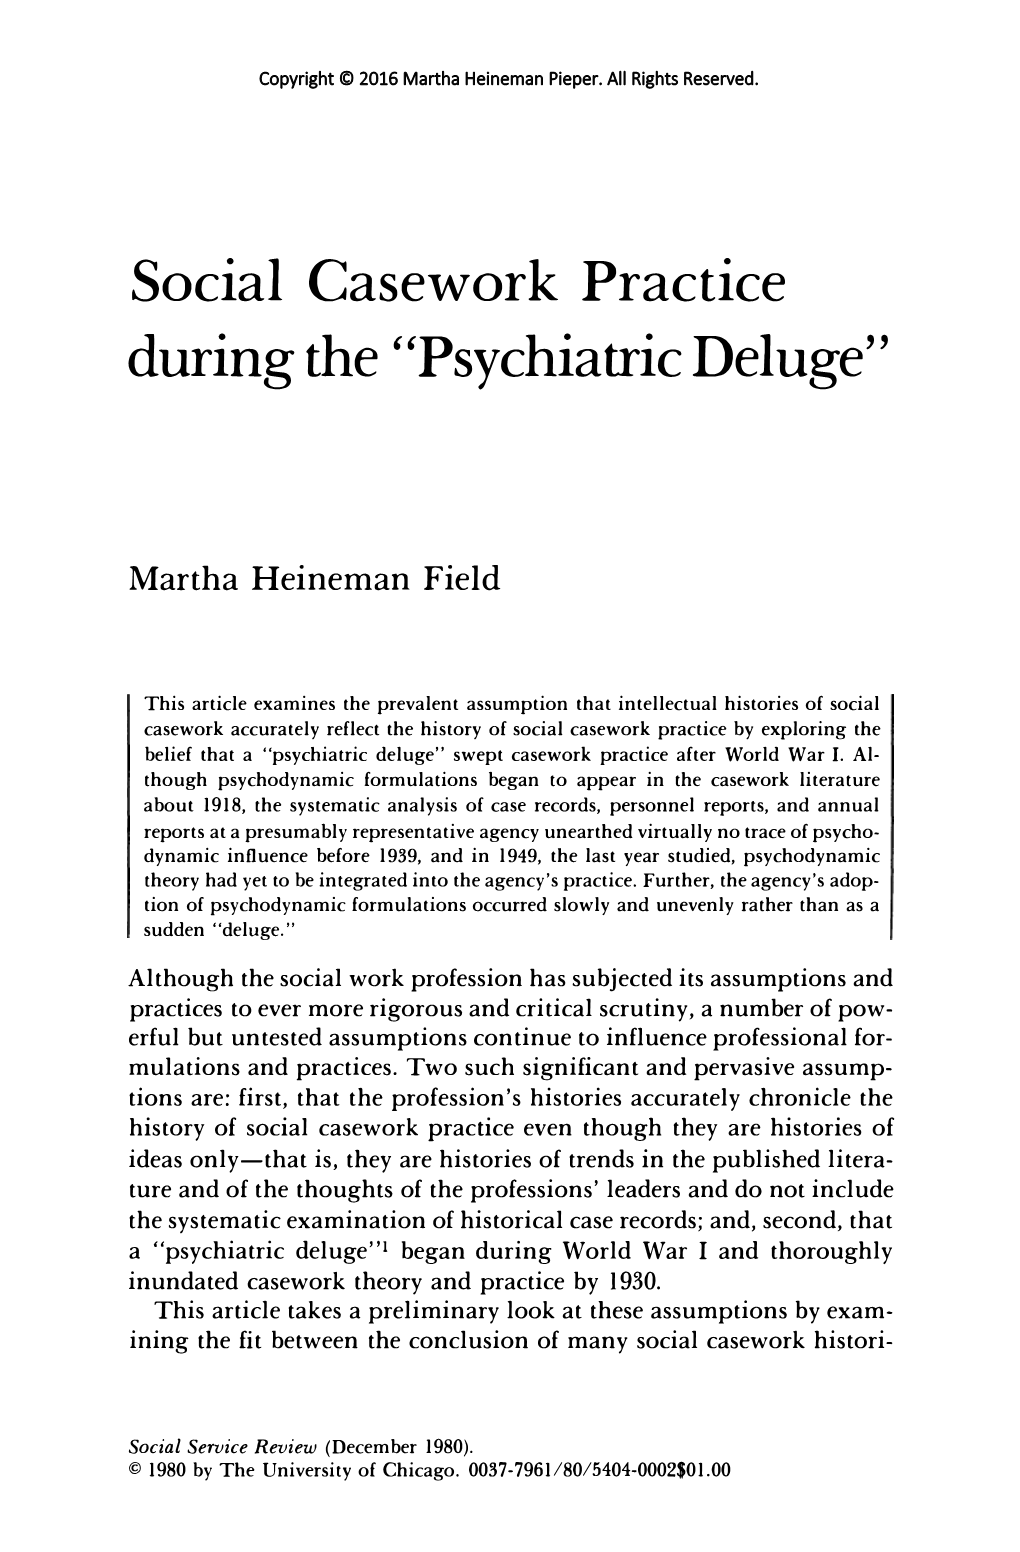 Social Casework Practice During the "Psychiatric Deluge"